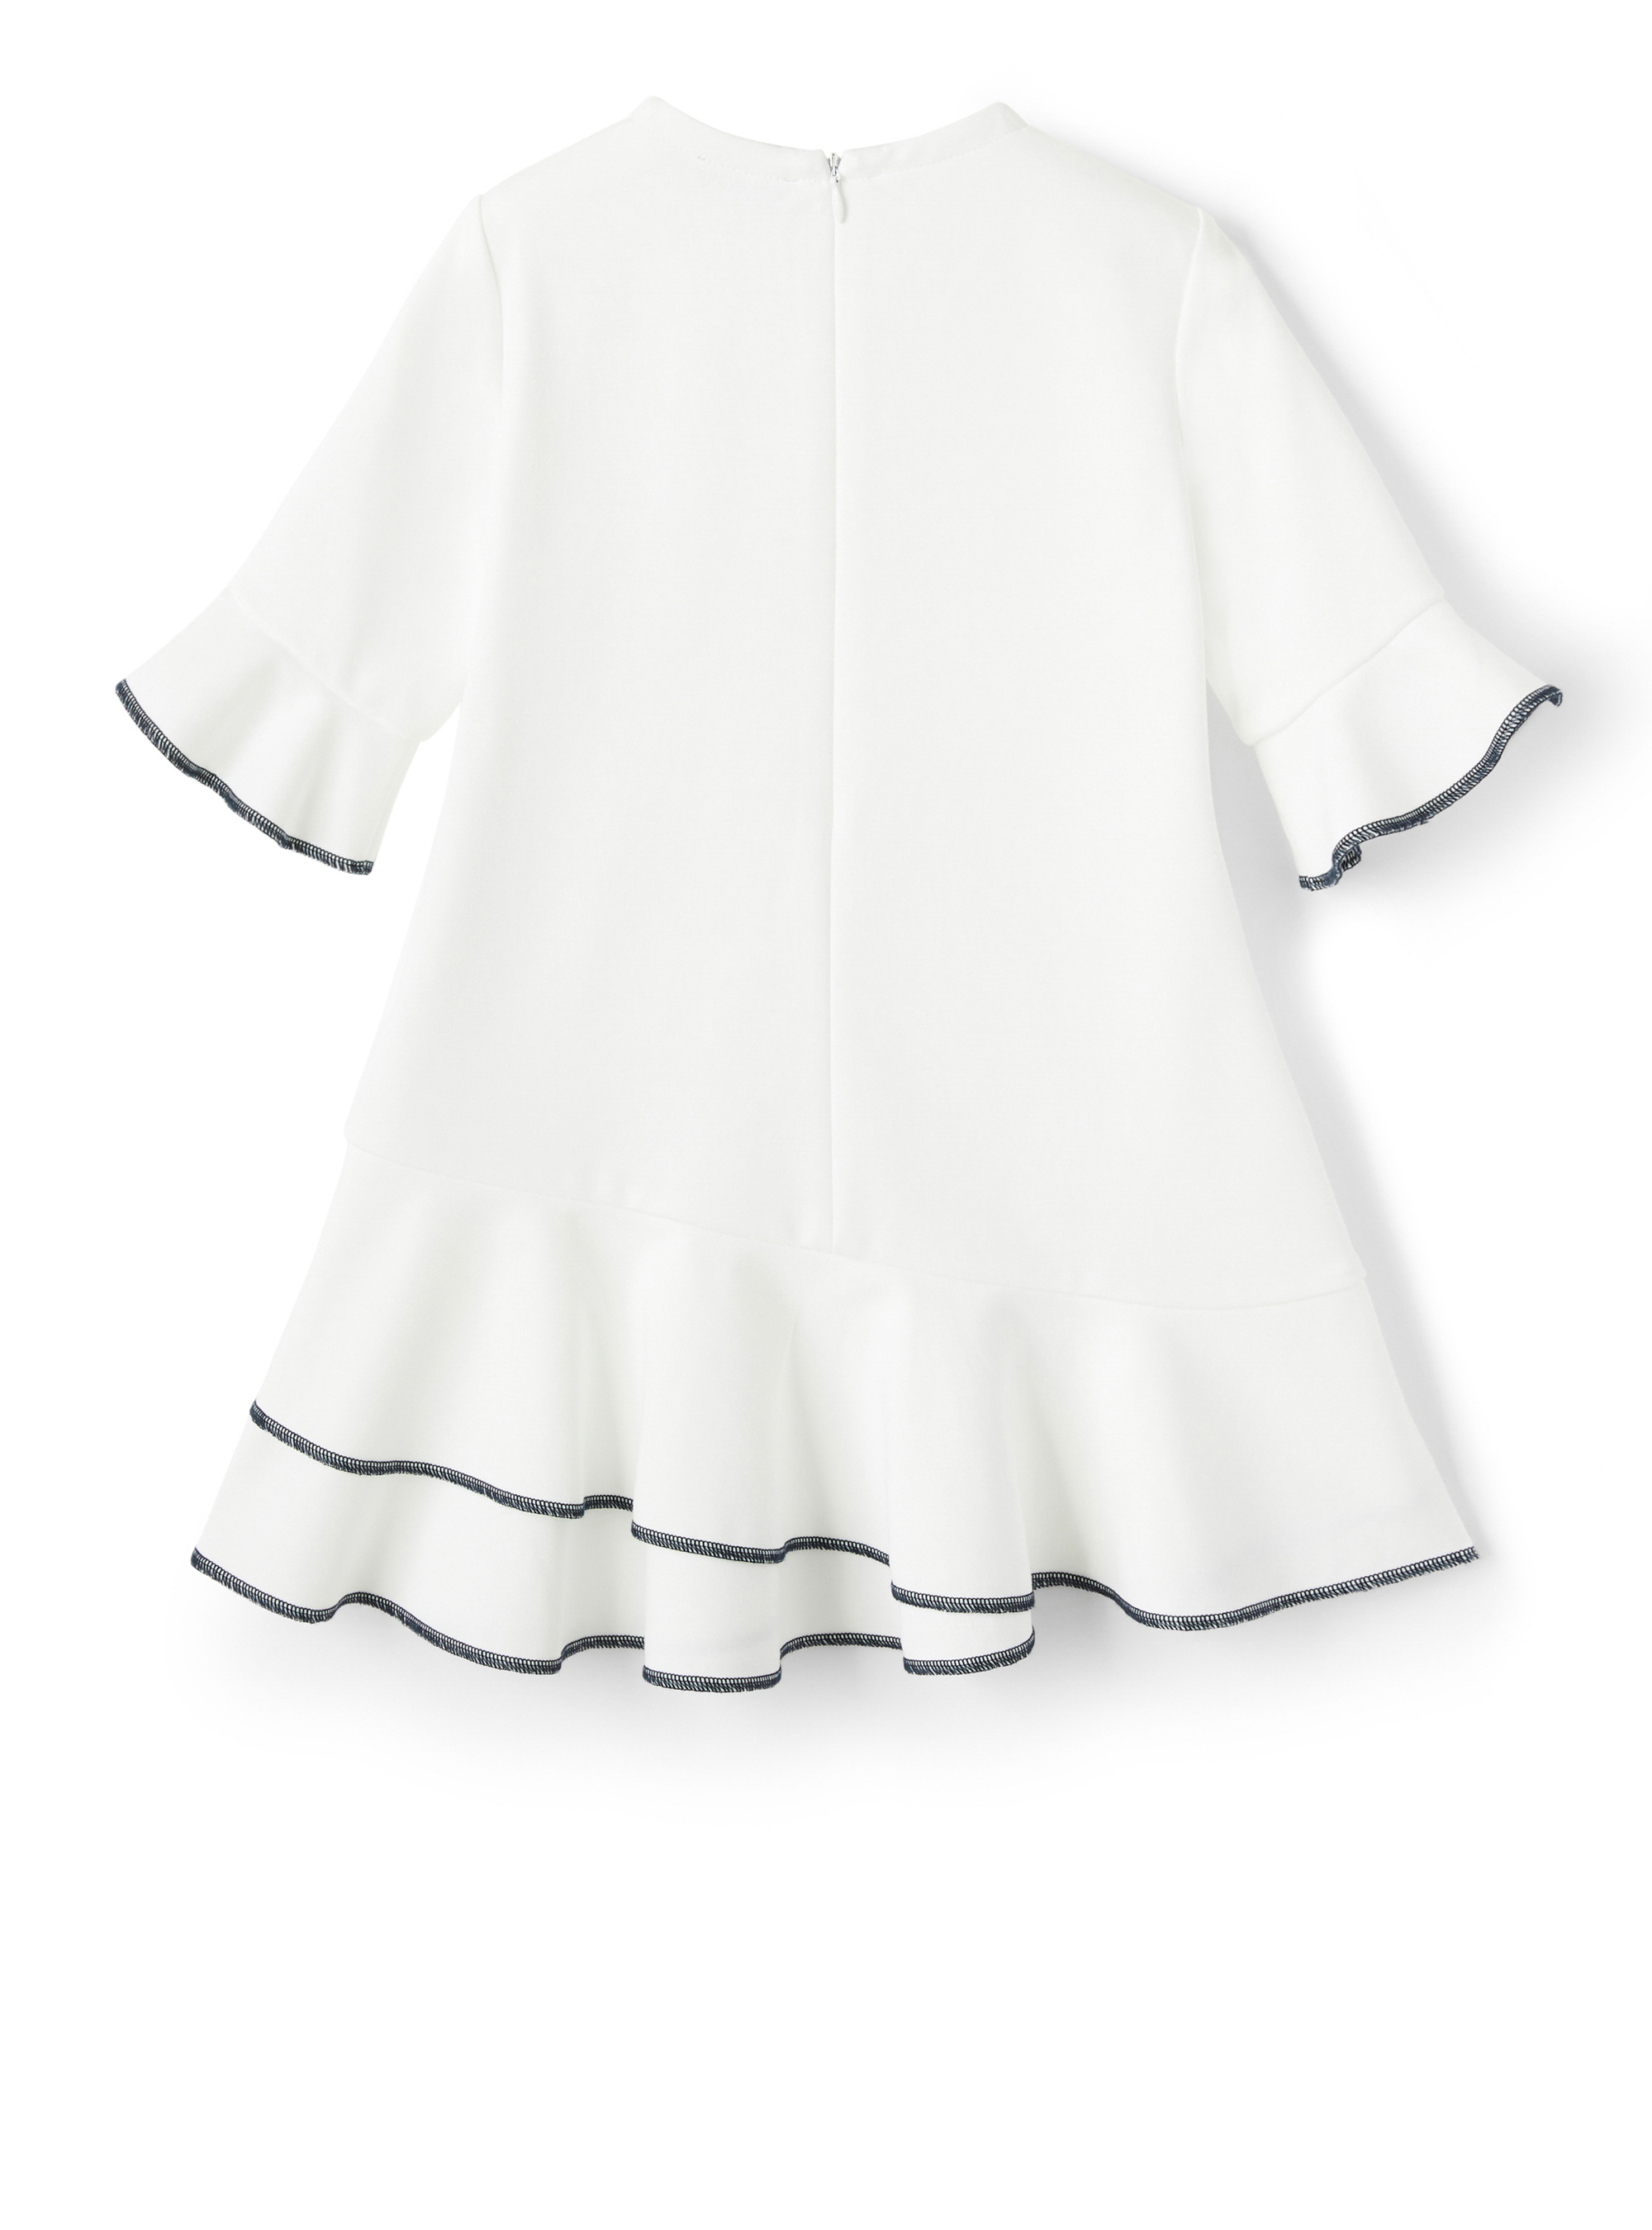 Rome stitch dress with flounces - White | Il Gufo